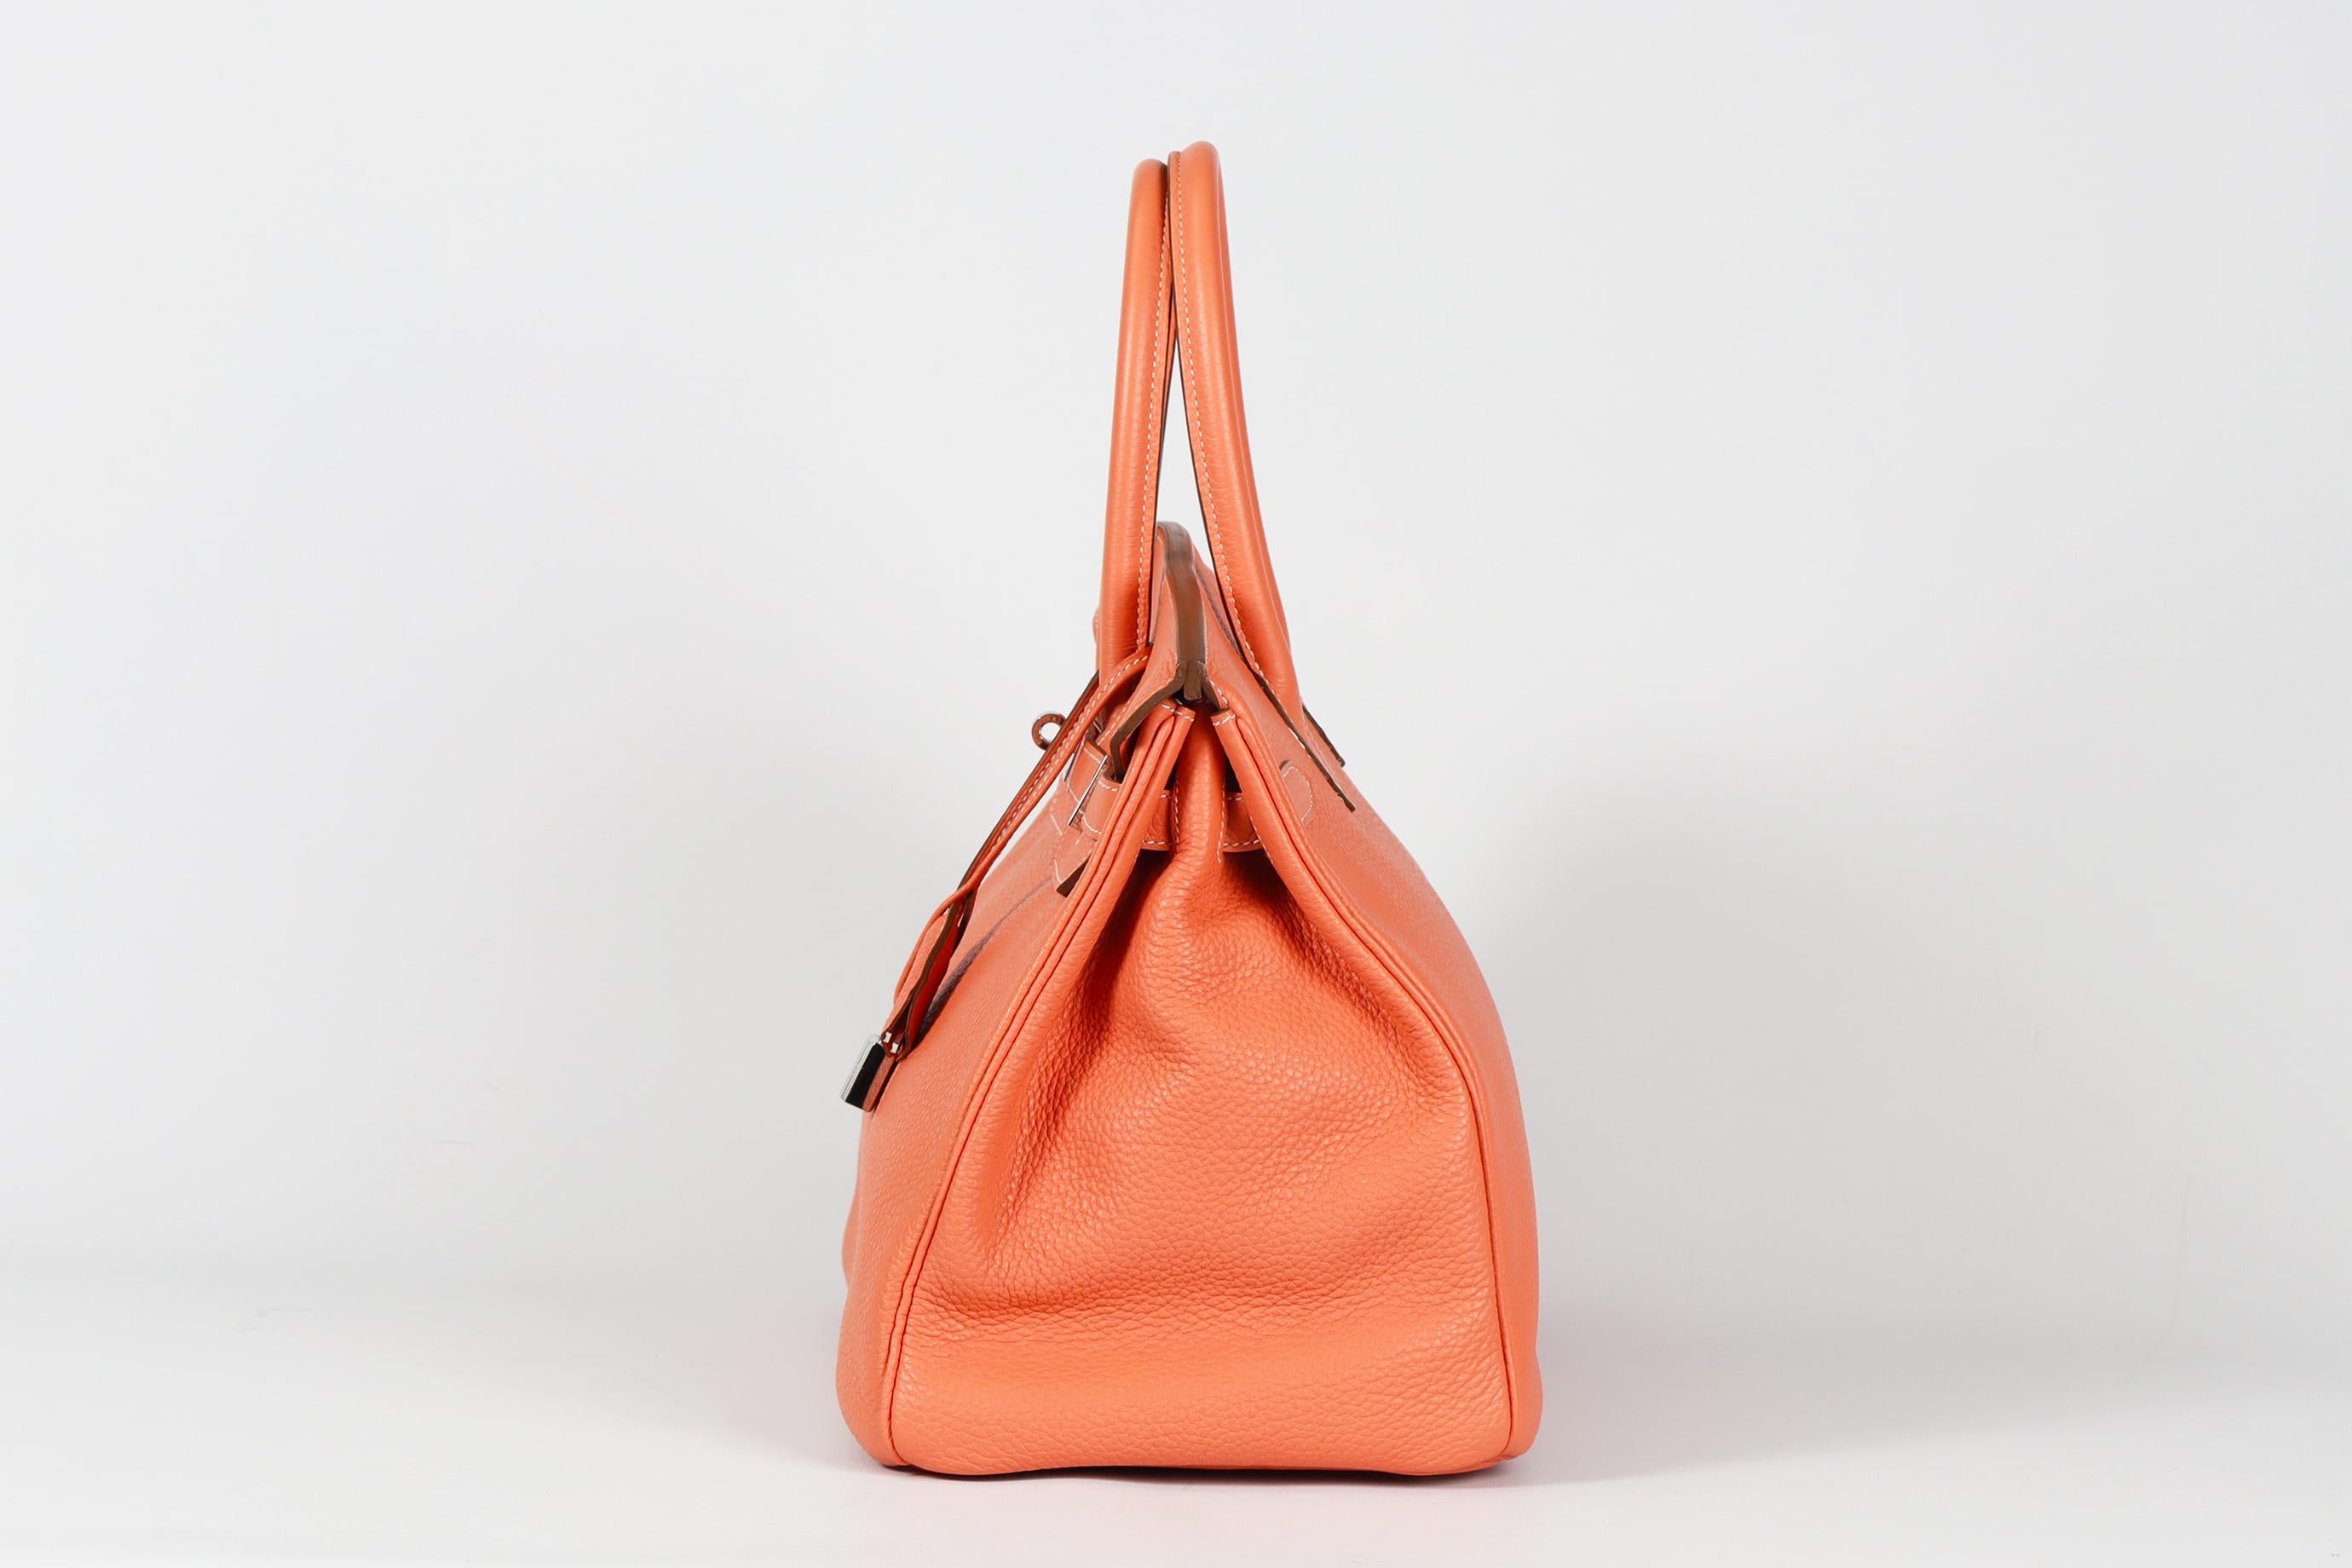 Hermès 2013 Birkin 35cm Clemence Leather Bag For Sale 2